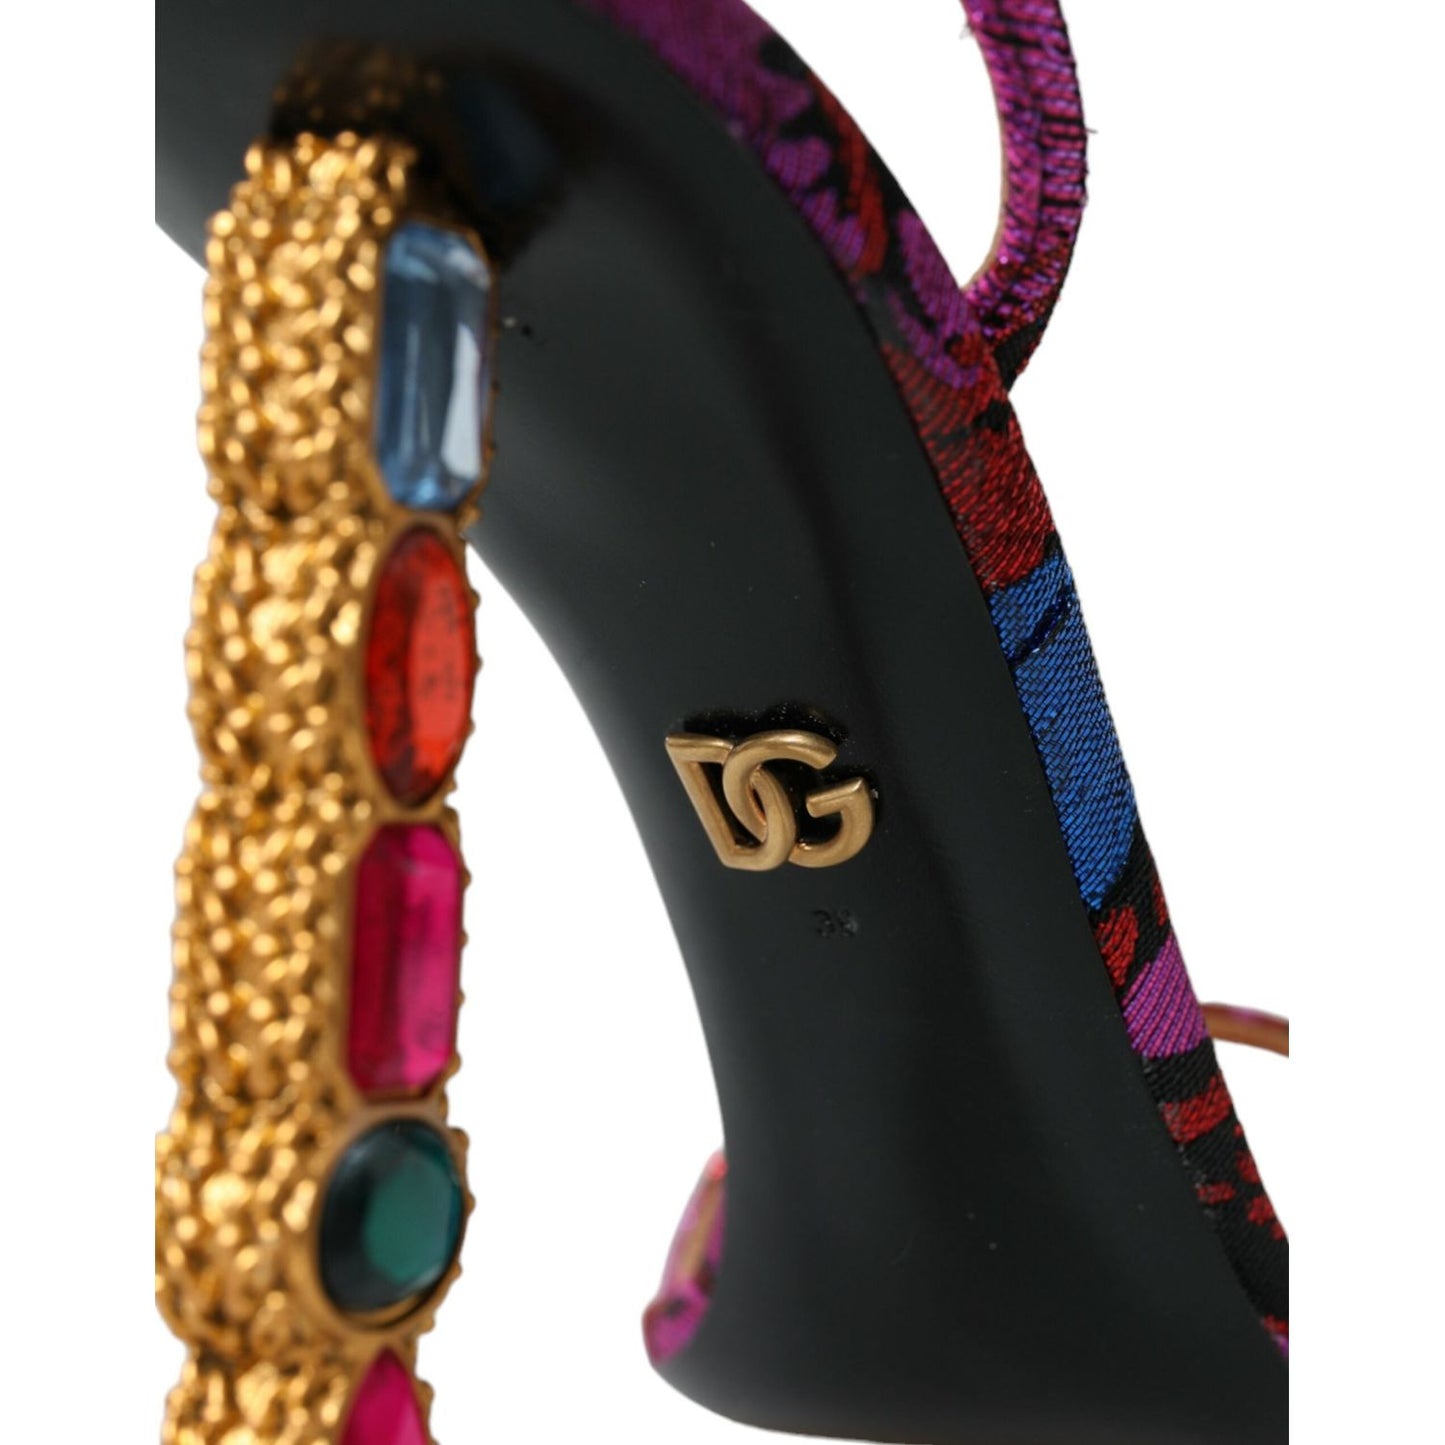 Dolce & Gabbana Multicolor Jacquard Crystals Sandals Shoes multicolor-jacquard-crystals-sandals-shoes